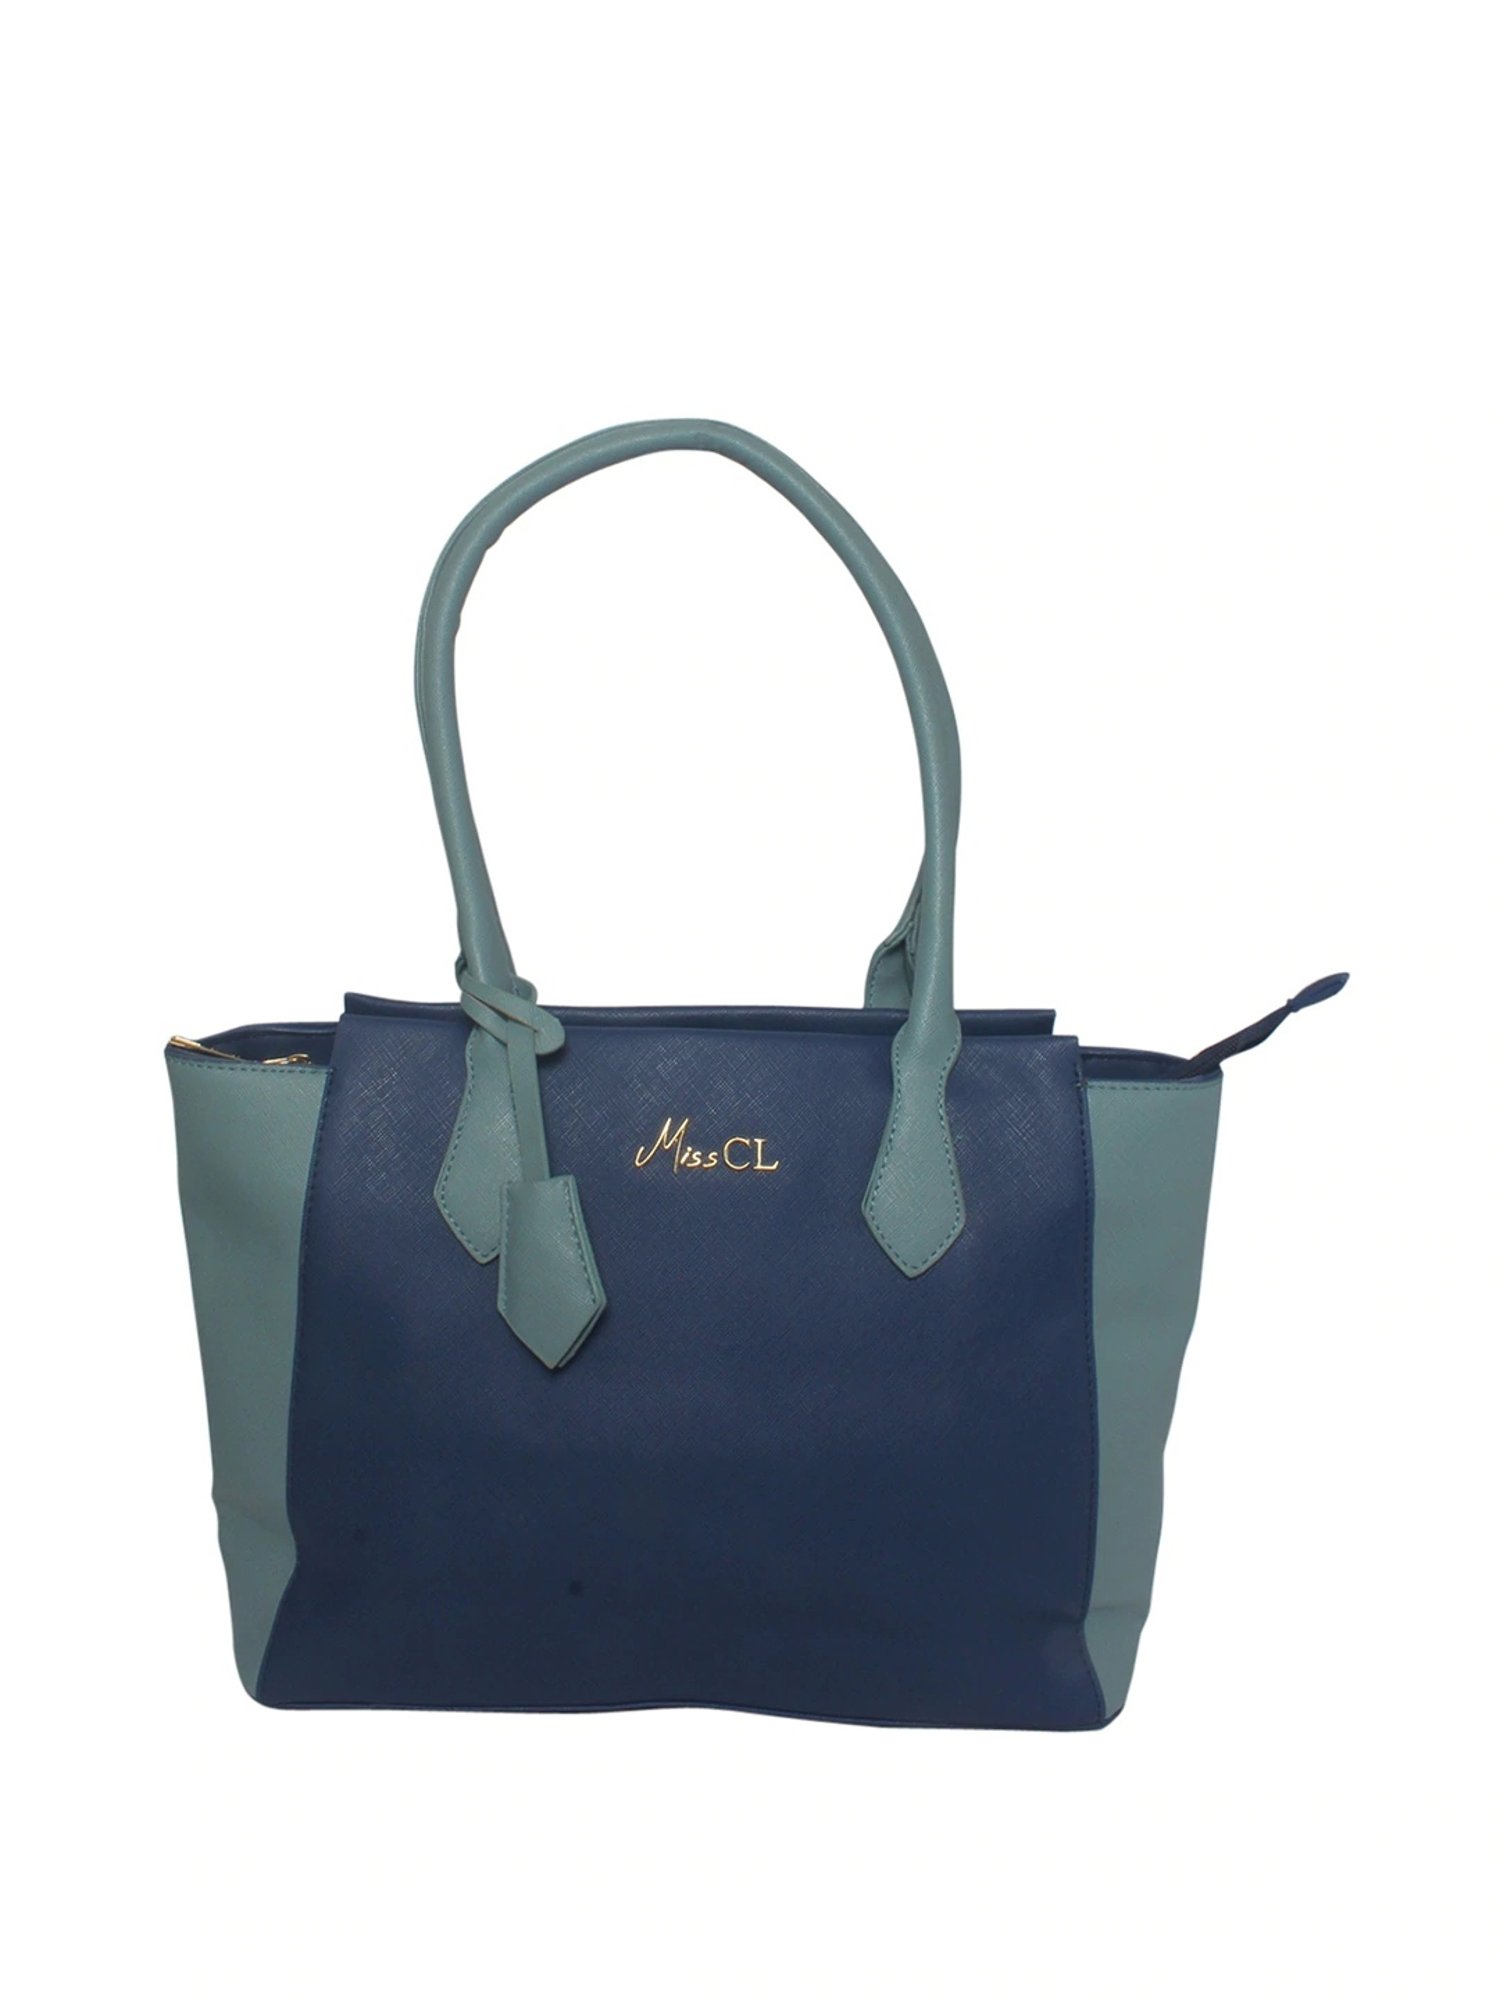 Buy Bellissa Blue Textured Medium Snakeskin Handbag Online At Best Price @  Tata CLiQ